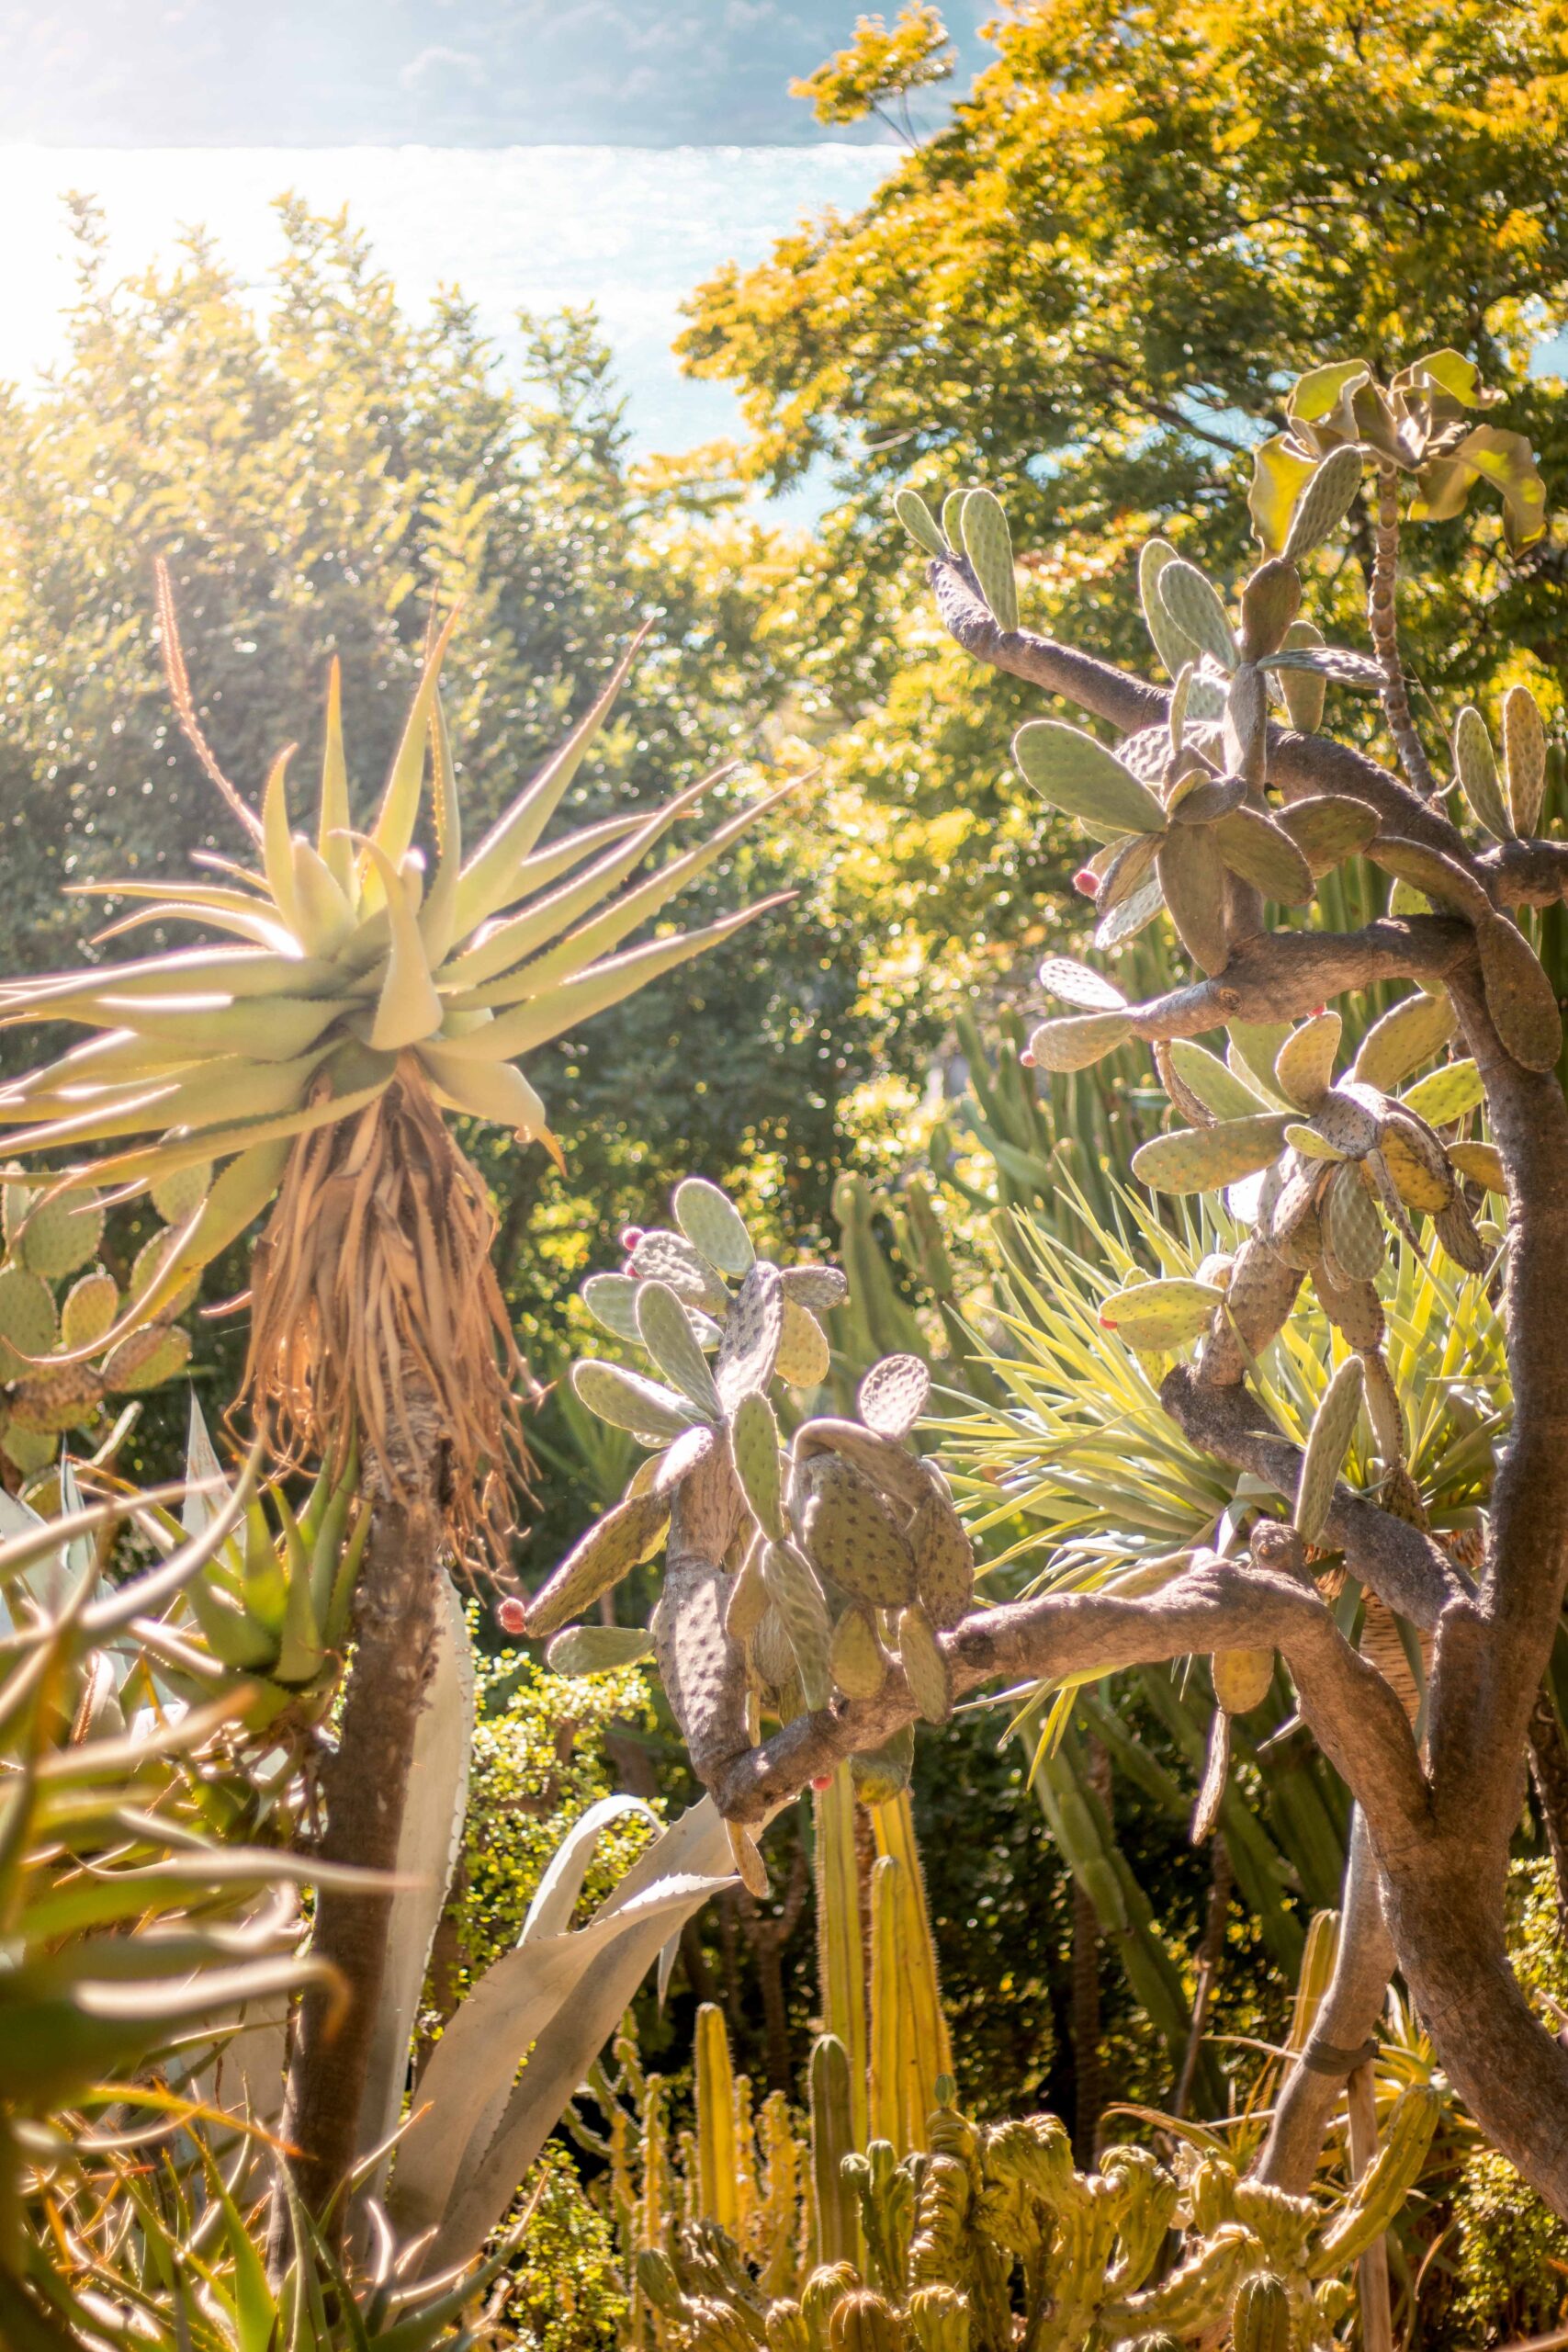 Cactus and succulent plants in the Exotic Garden of Villa Ephrussi de Rothschild in Saint-Jean-Cap-Ferrat, France